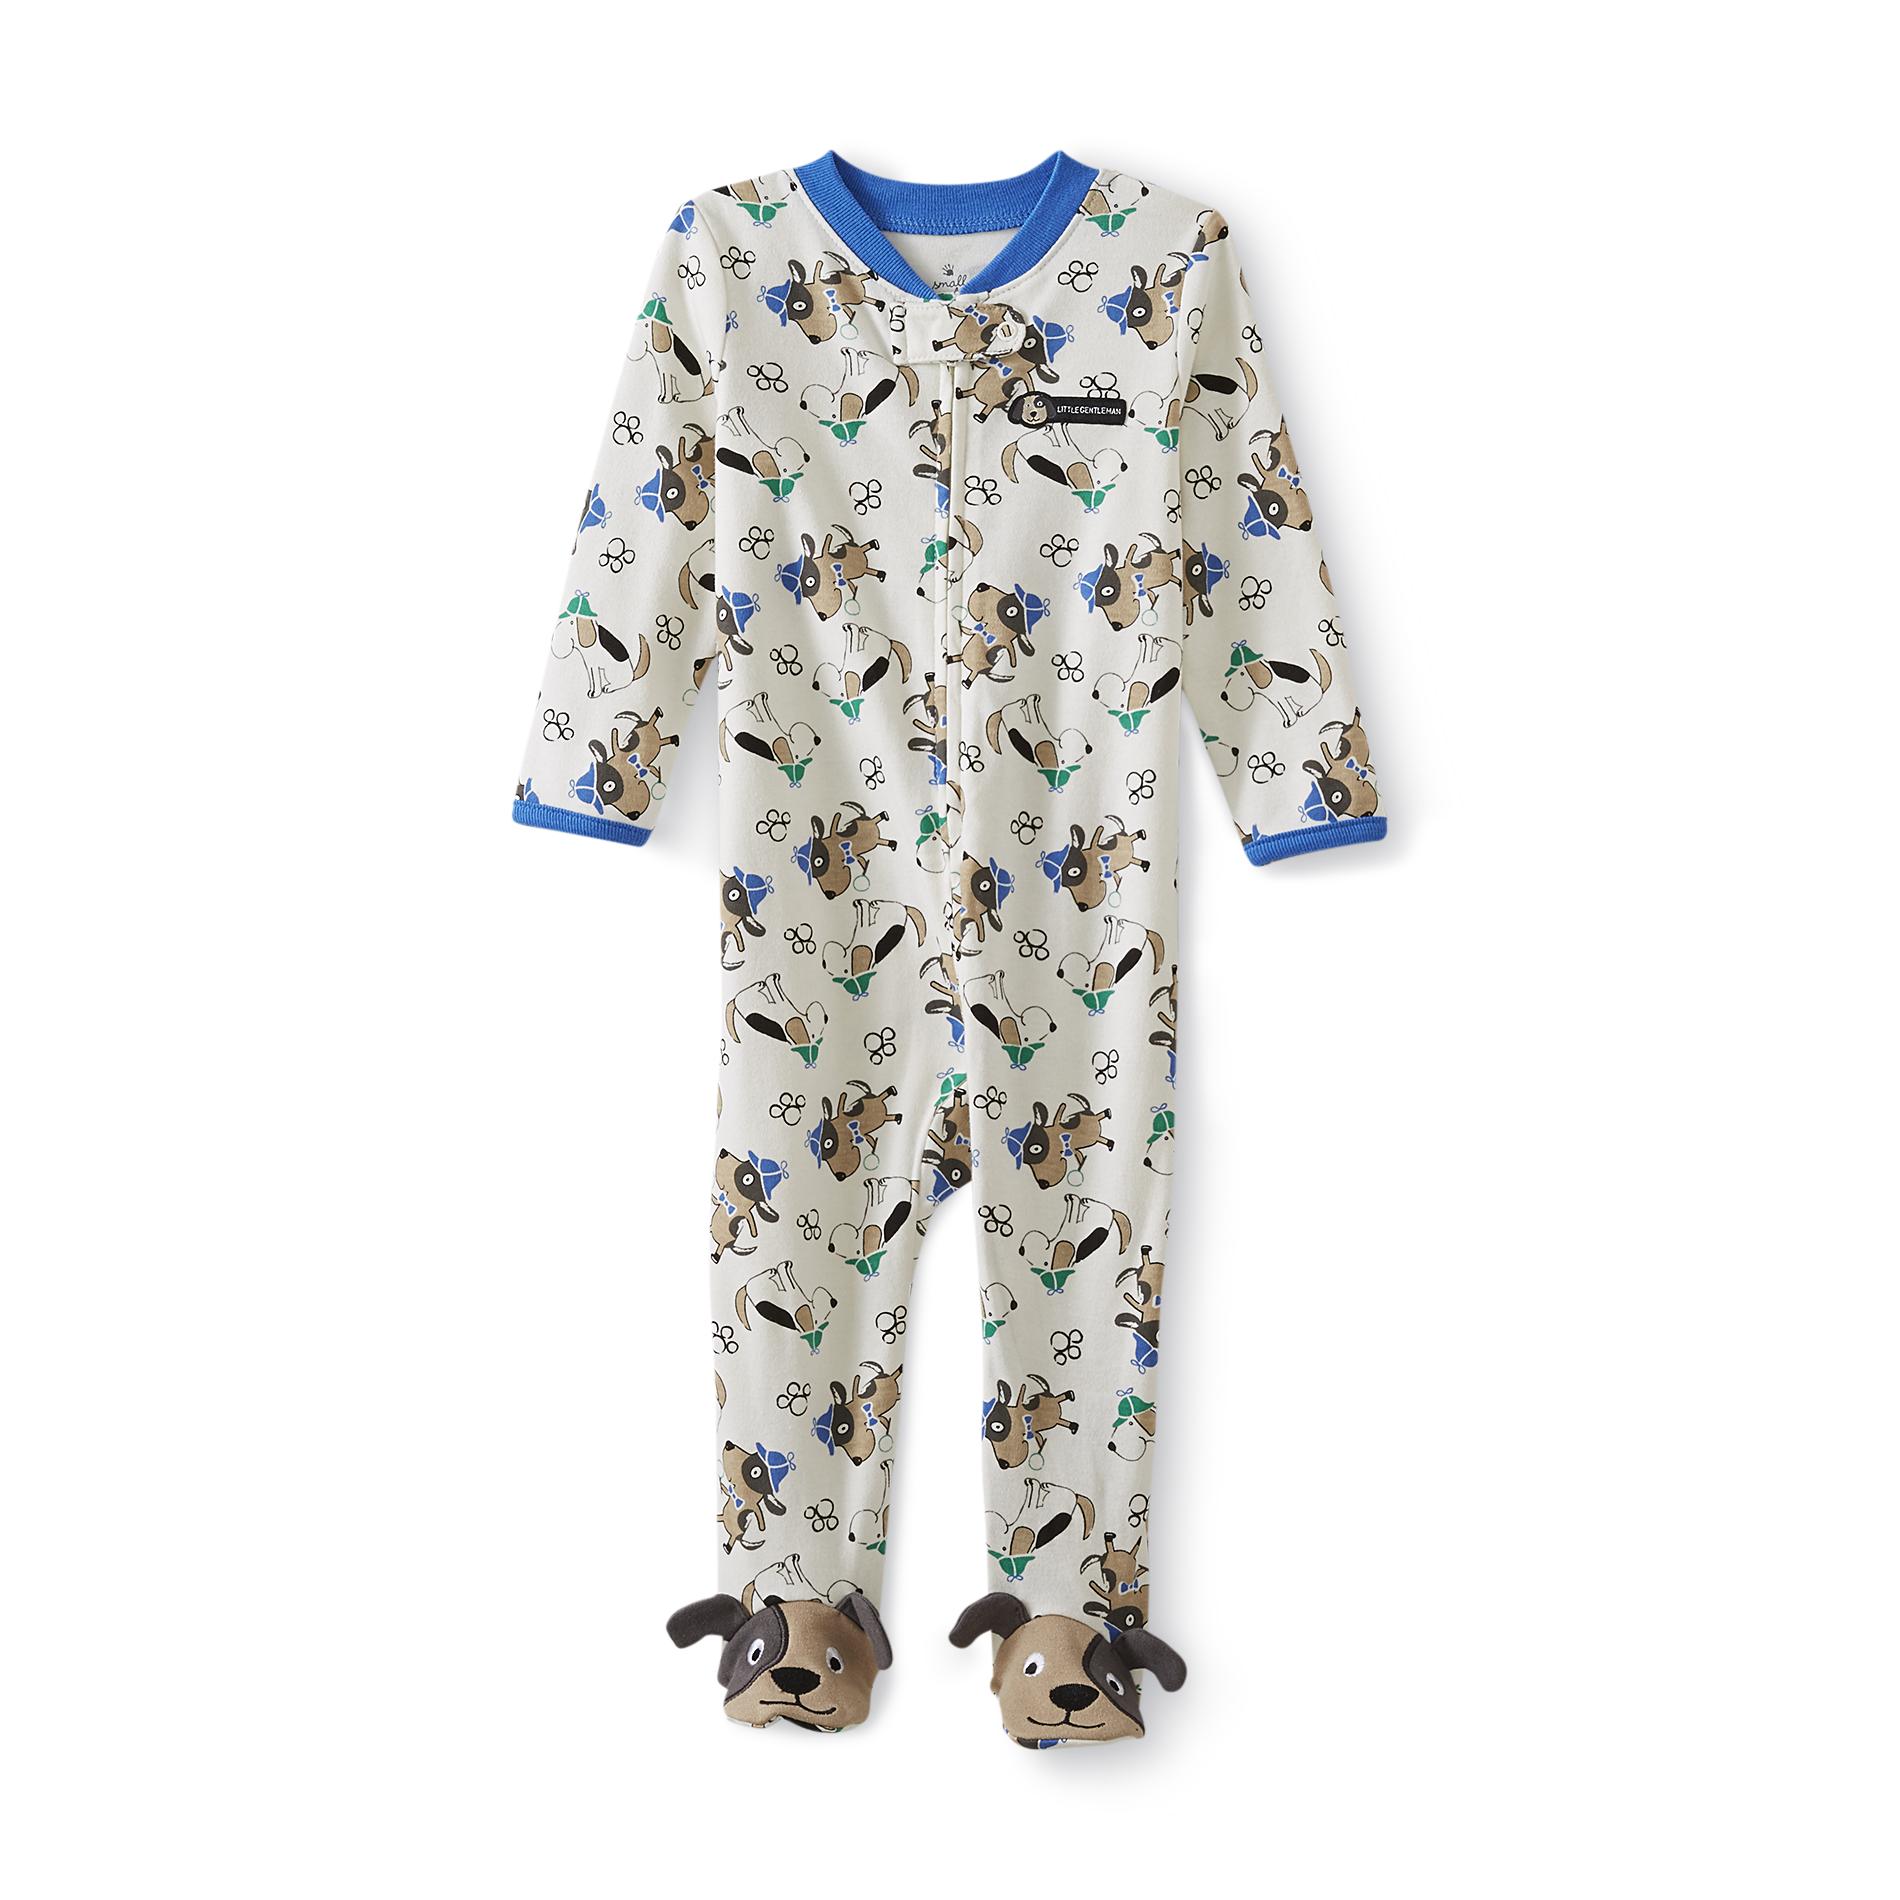 Newborn Boy's Footed Pajamas - Puppies